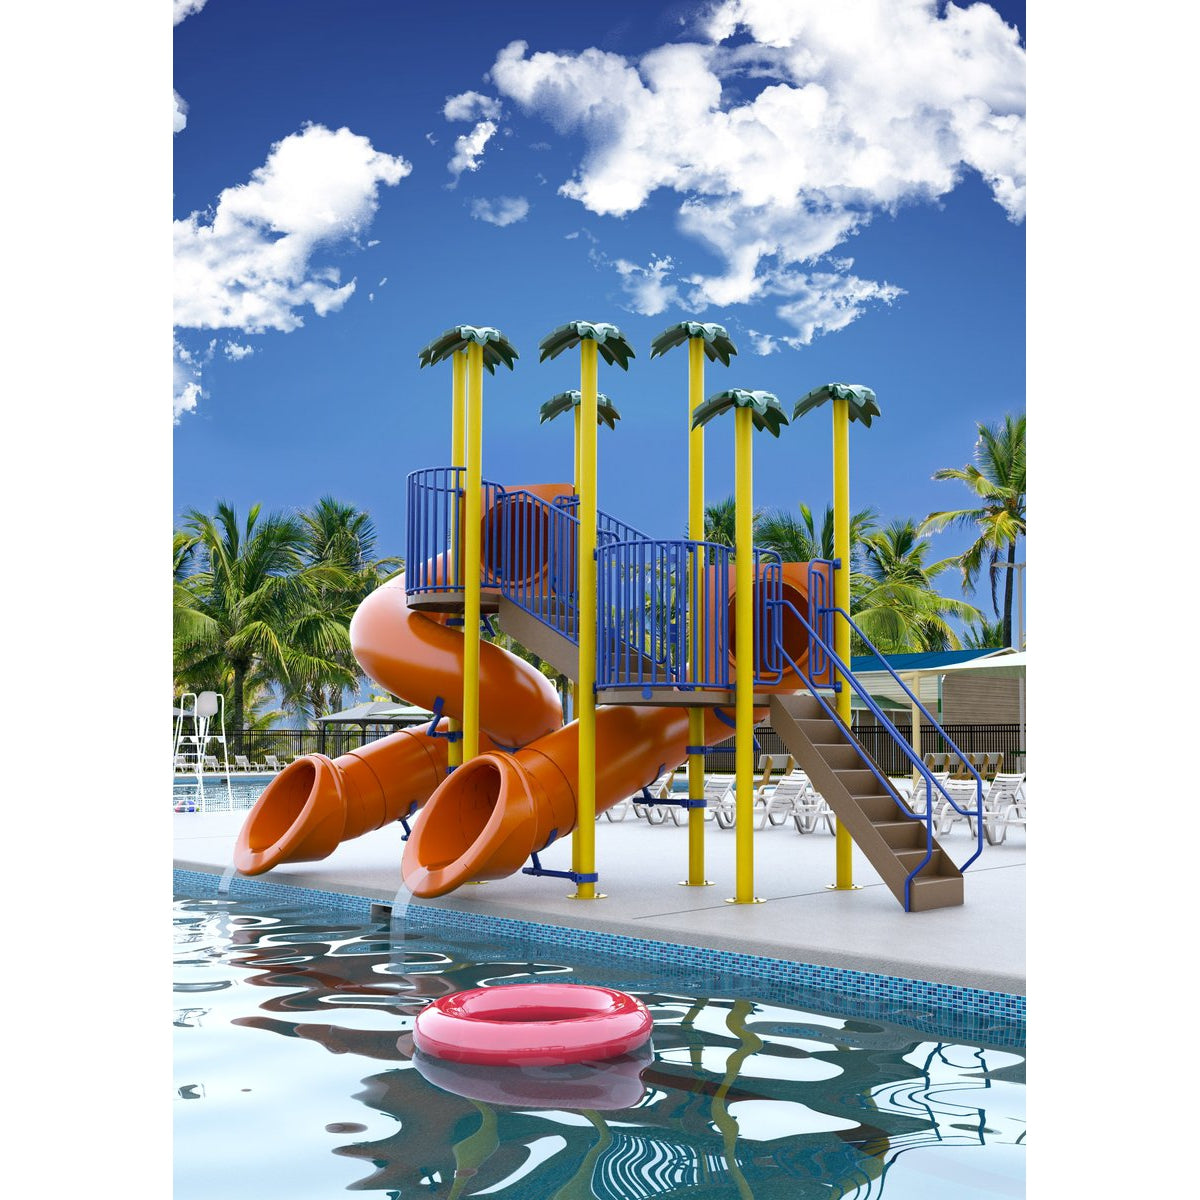 Commercial Pool Slides for Sale